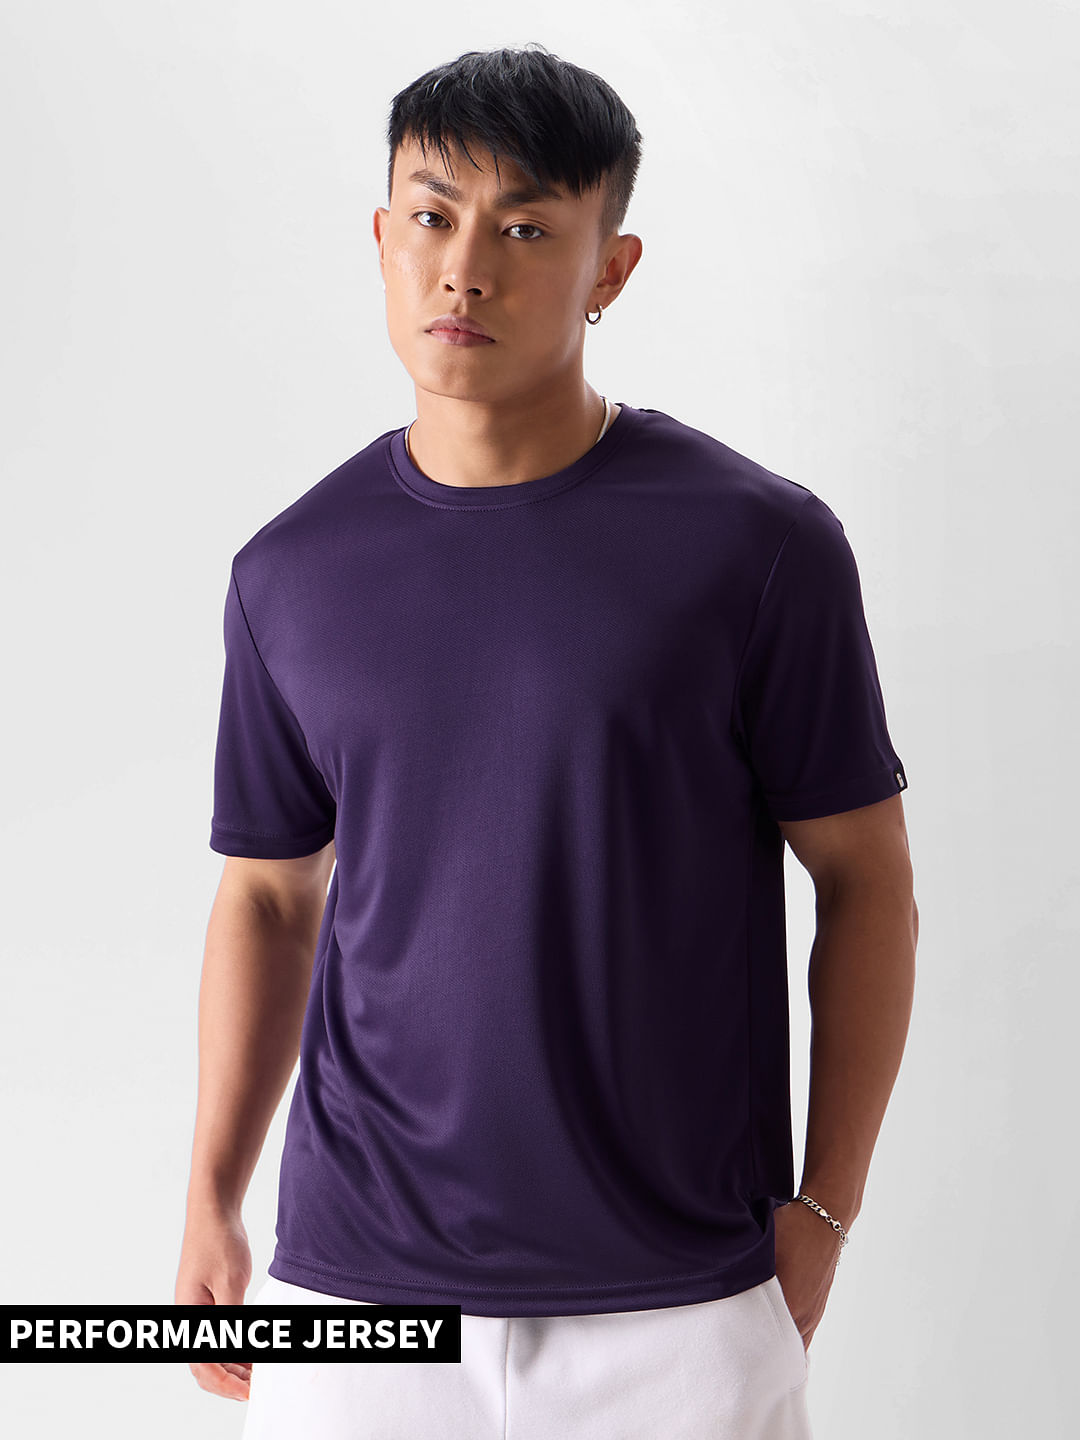 Buy Solids: Purple Jersey Online